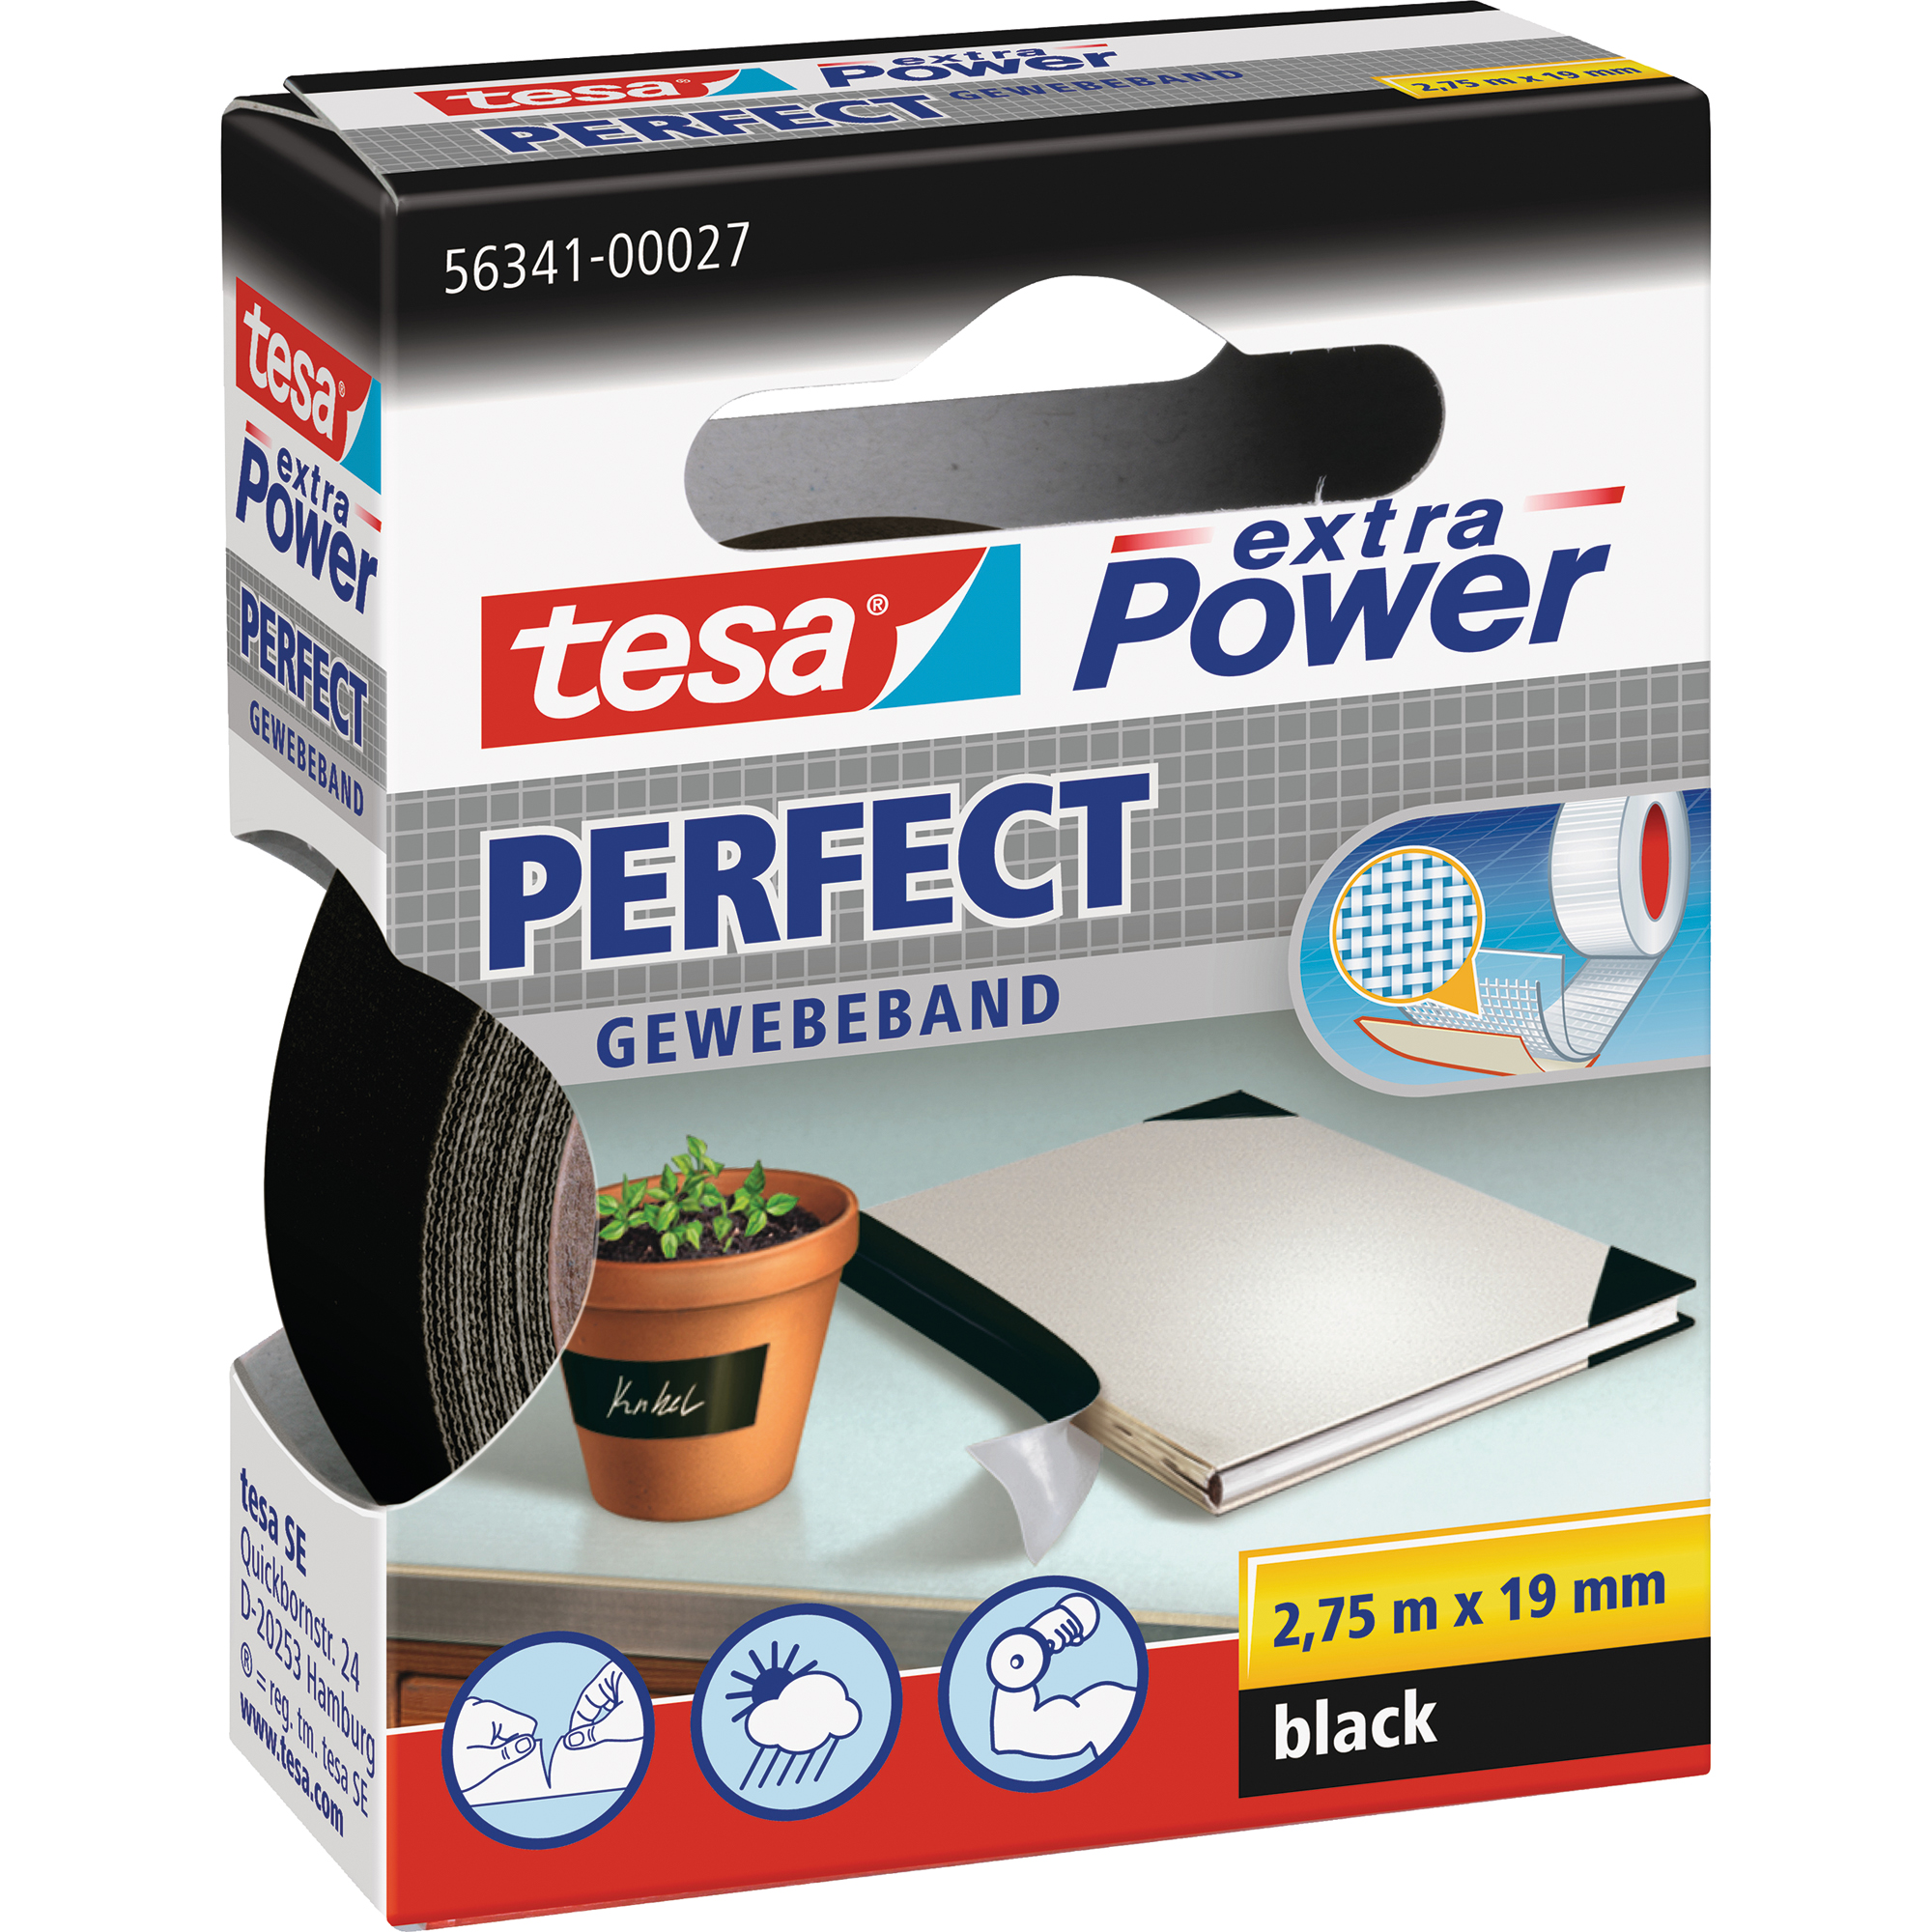 tesa® Gewebeband extra Power® Perfect 38 mm schwarz